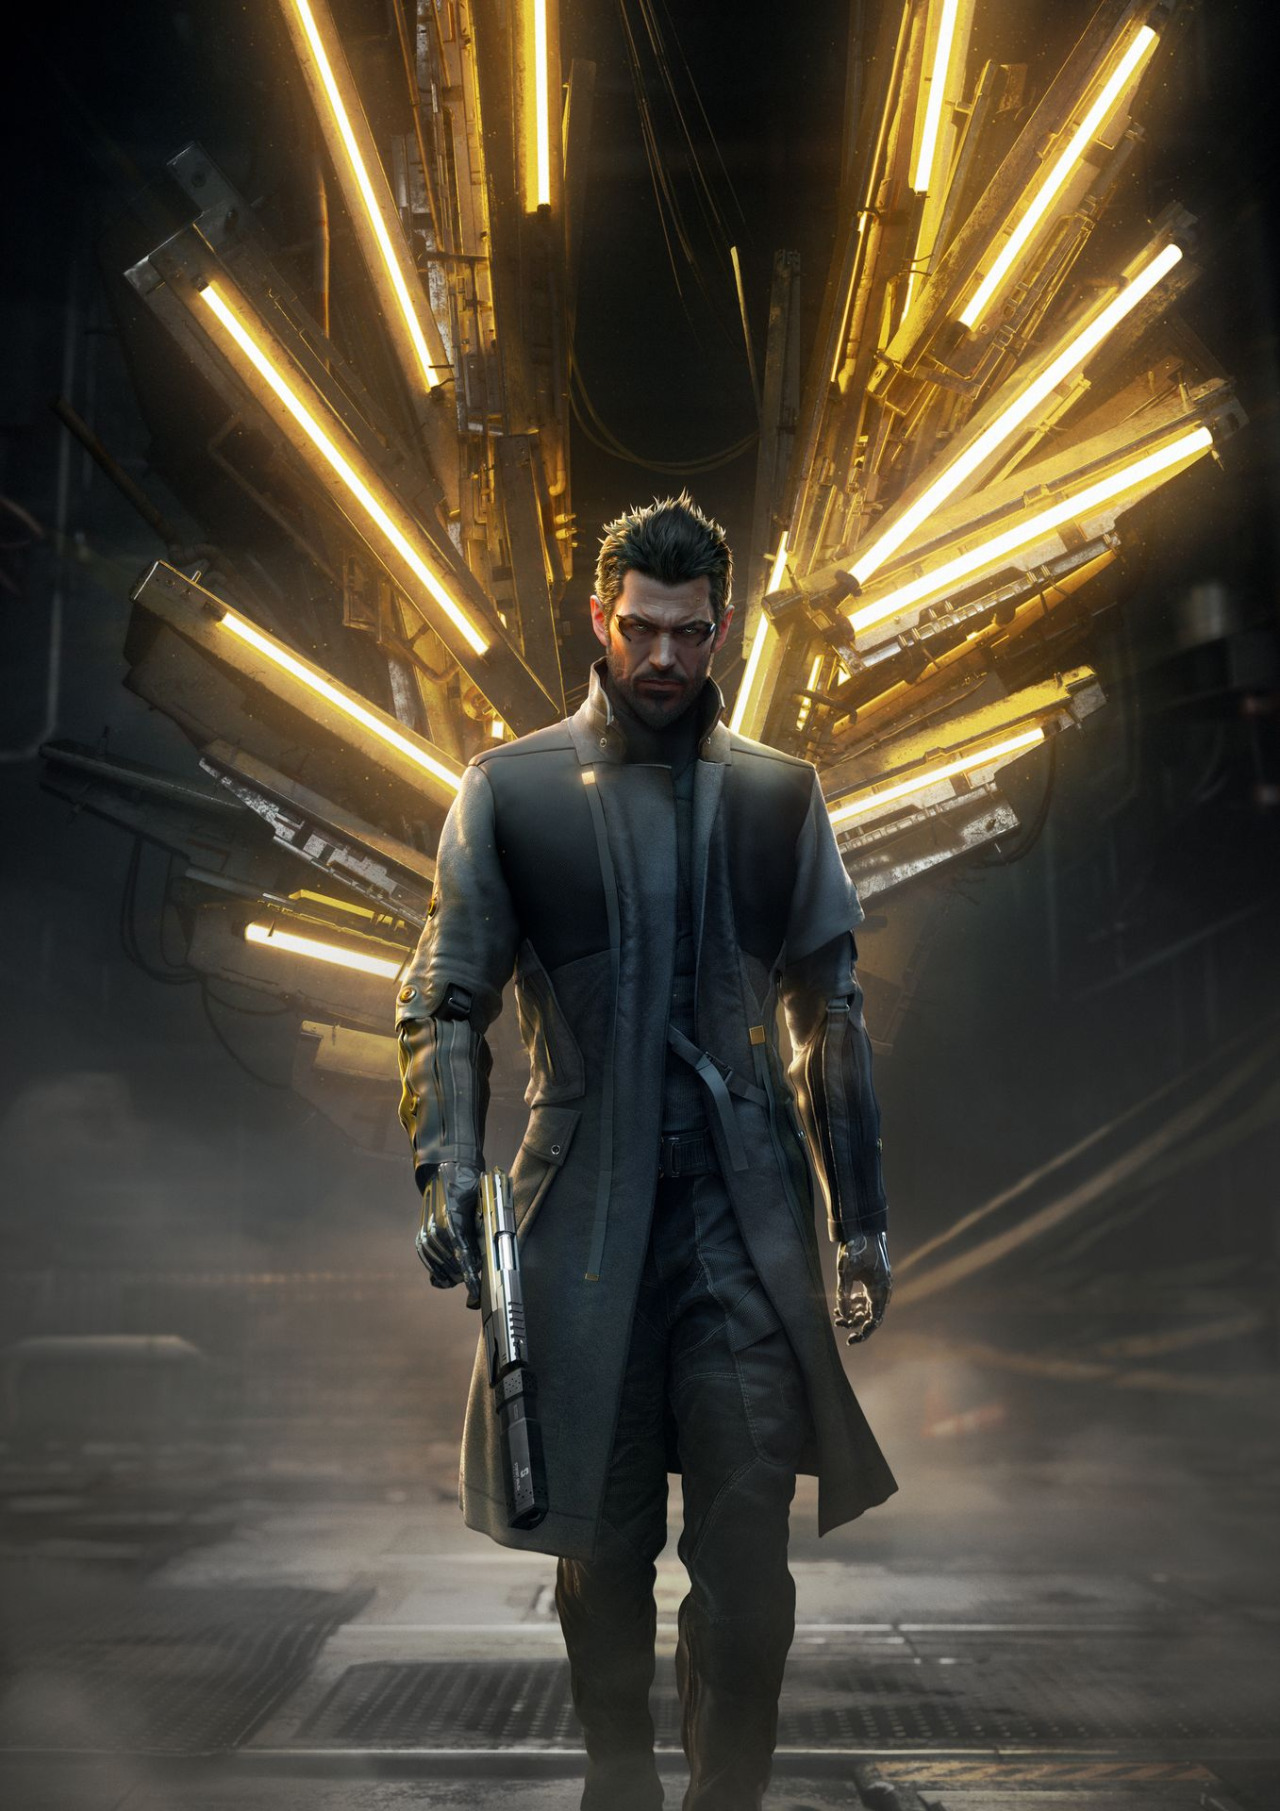 Deus Ex: Mankind Divided Art